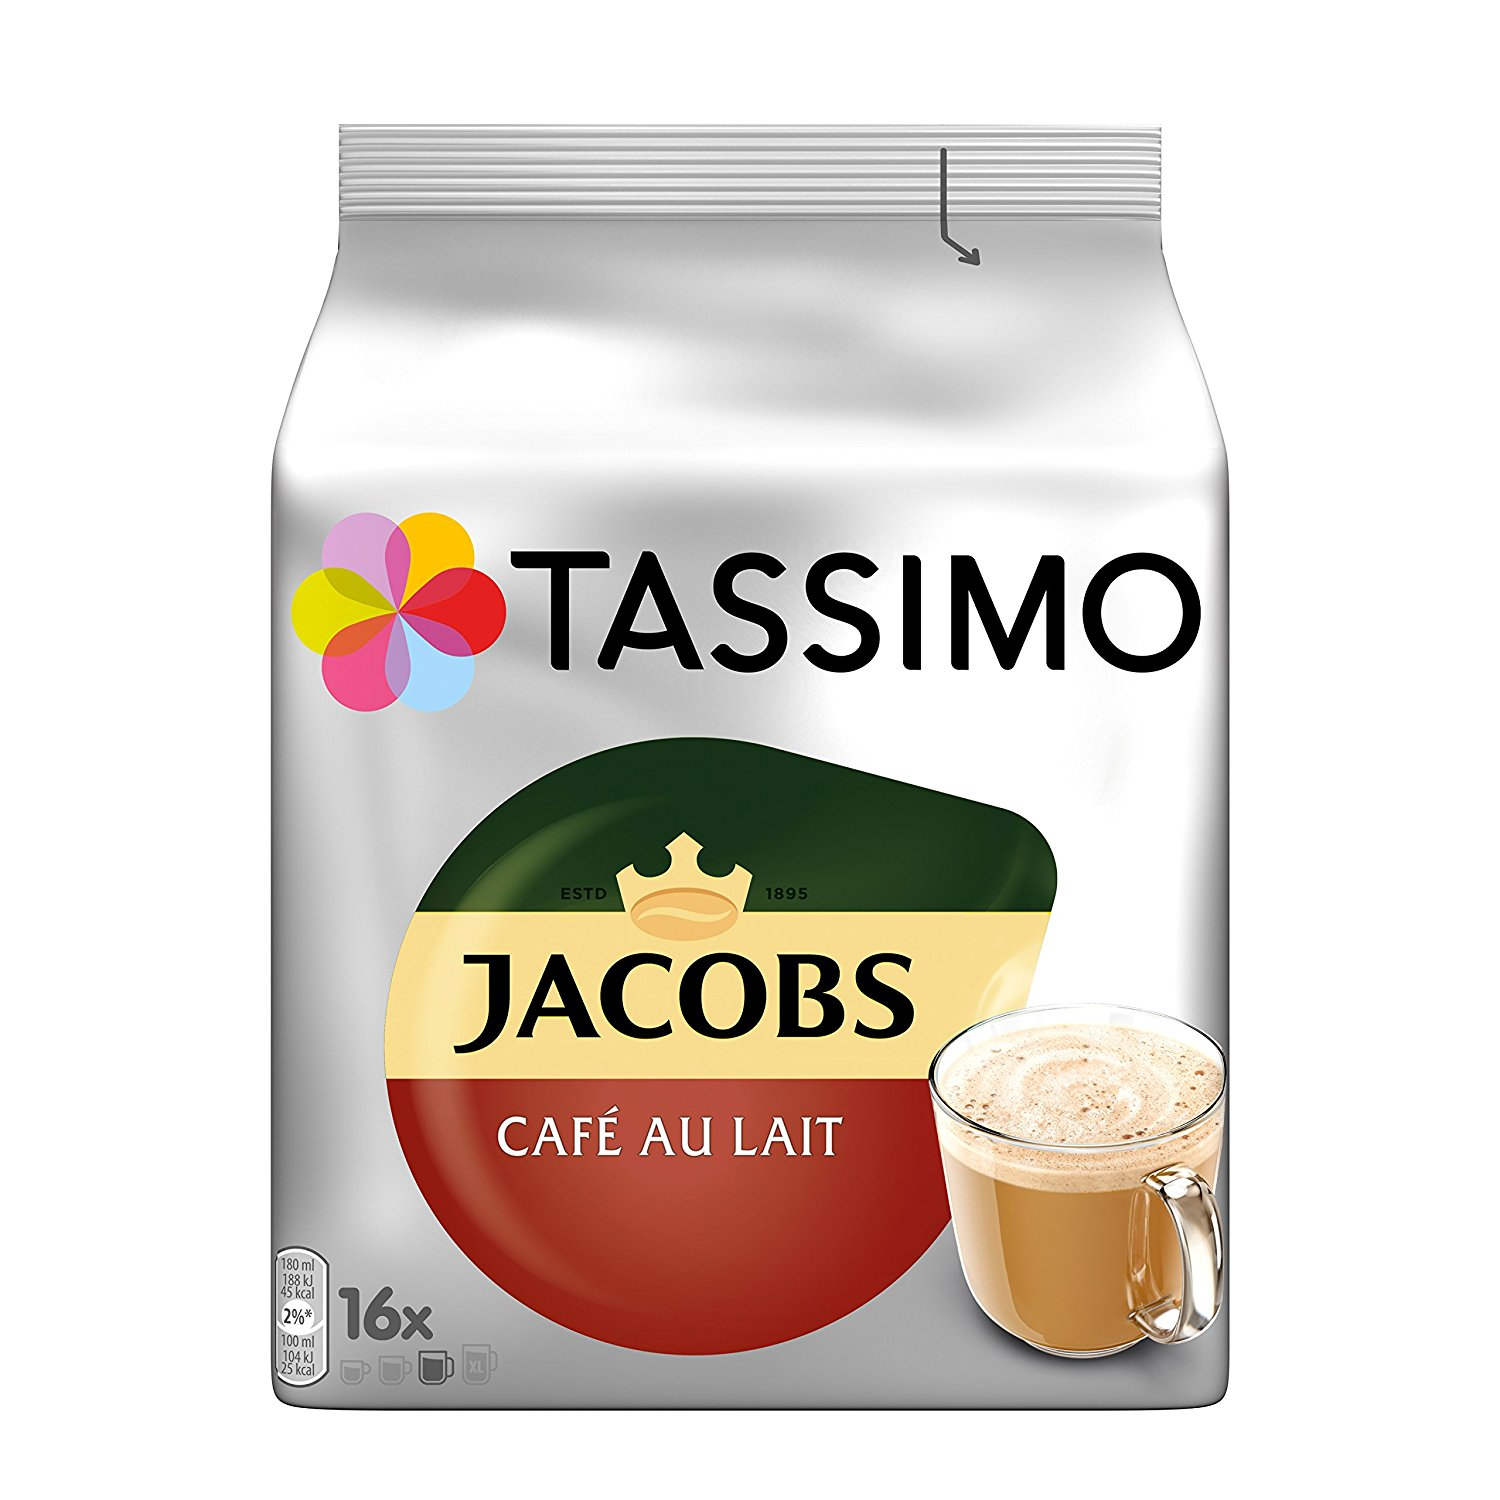 TASSIMO Jacobs Lovers 4 48 Café - Au (Tassimo Packungen Cappuccino, Lait (T-Disc Kaffeekapseln - 5 Getränke Sorten System)) - Latte Maschine Macchiato